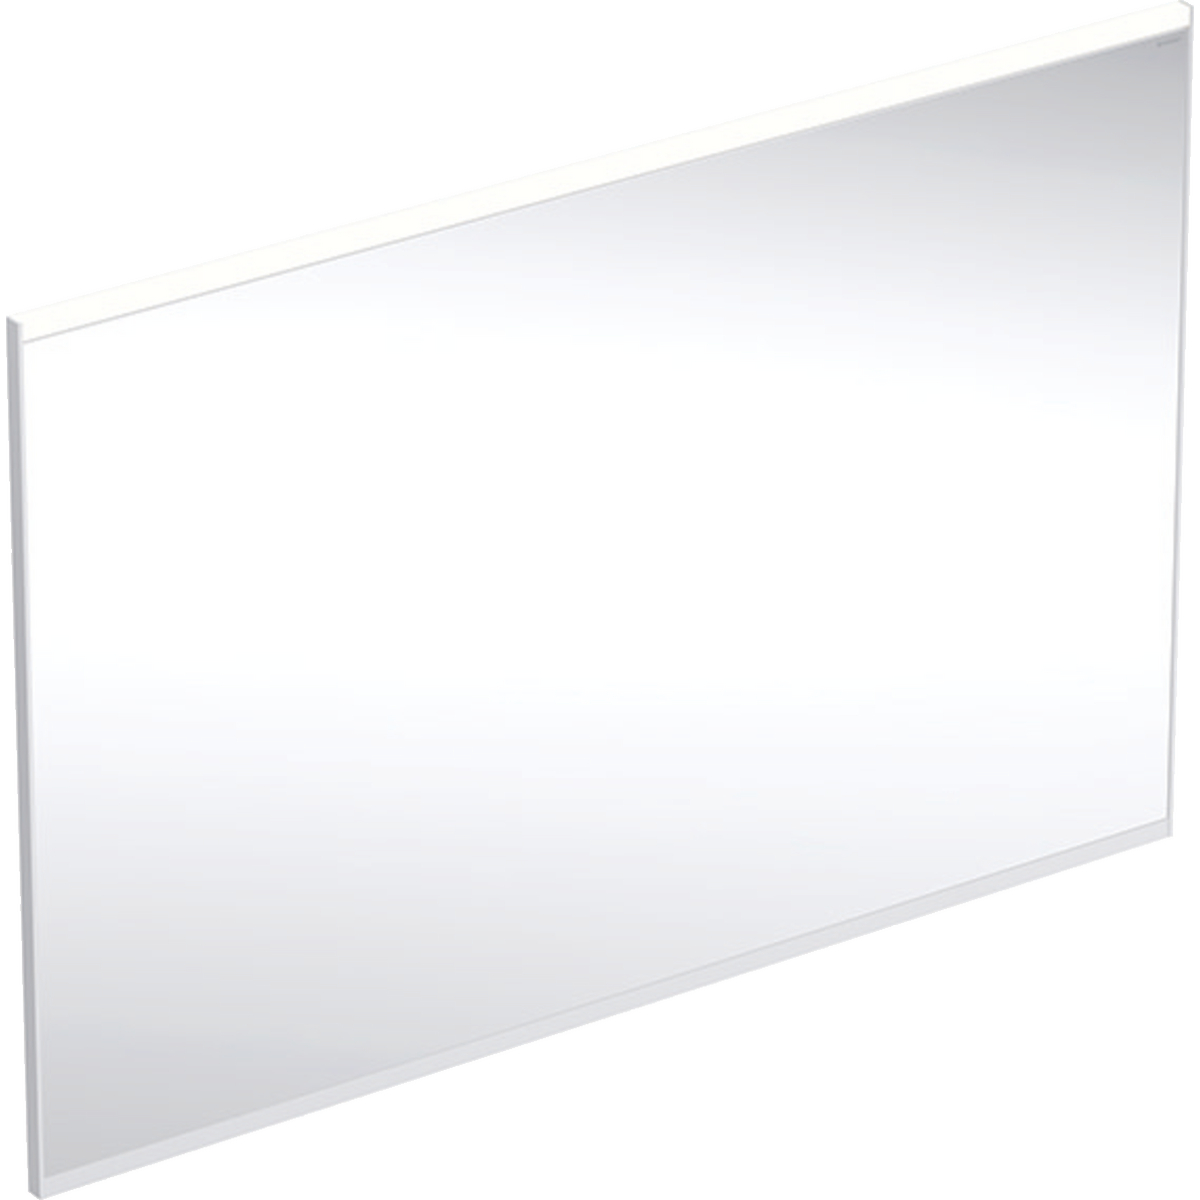 Option Plus Square illuminated mirror with lighting - 1050mm